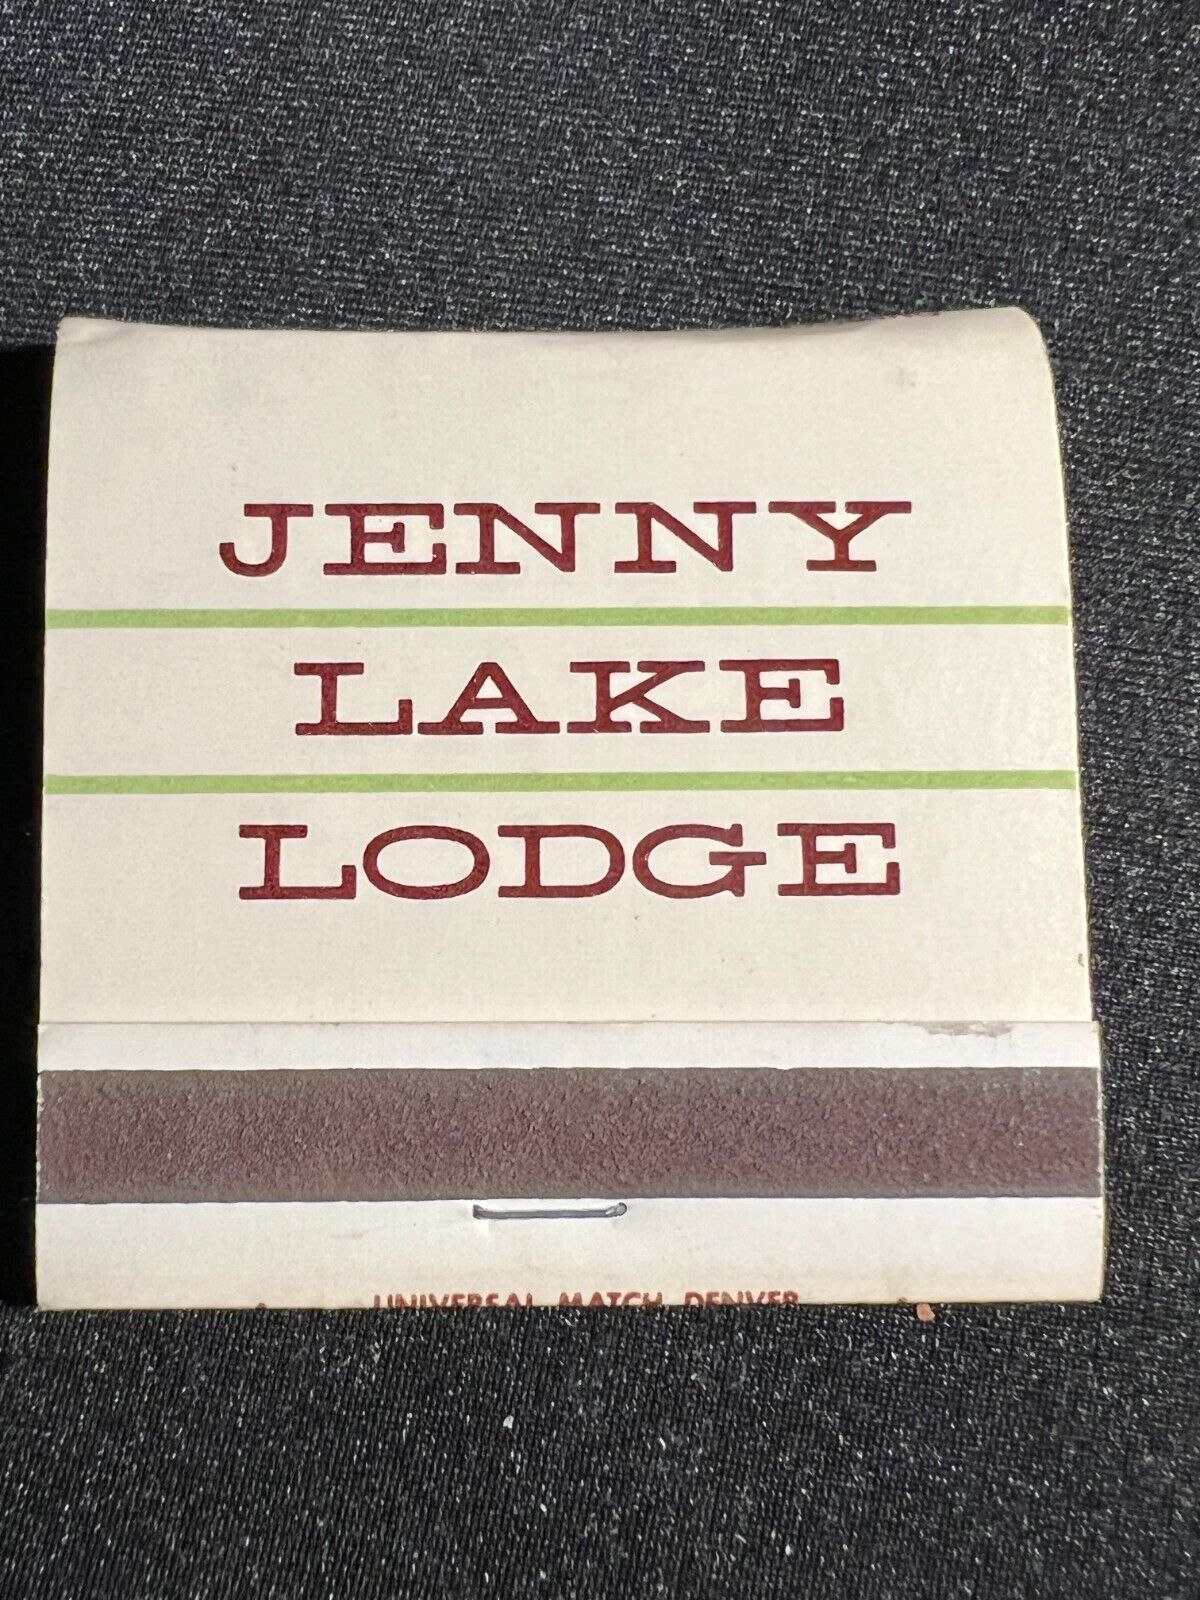 VINTAGE MATCHBOOK - JENNY LAKE LODGE - GRAND TETON NATIONAL PARK - UNSTRUCK